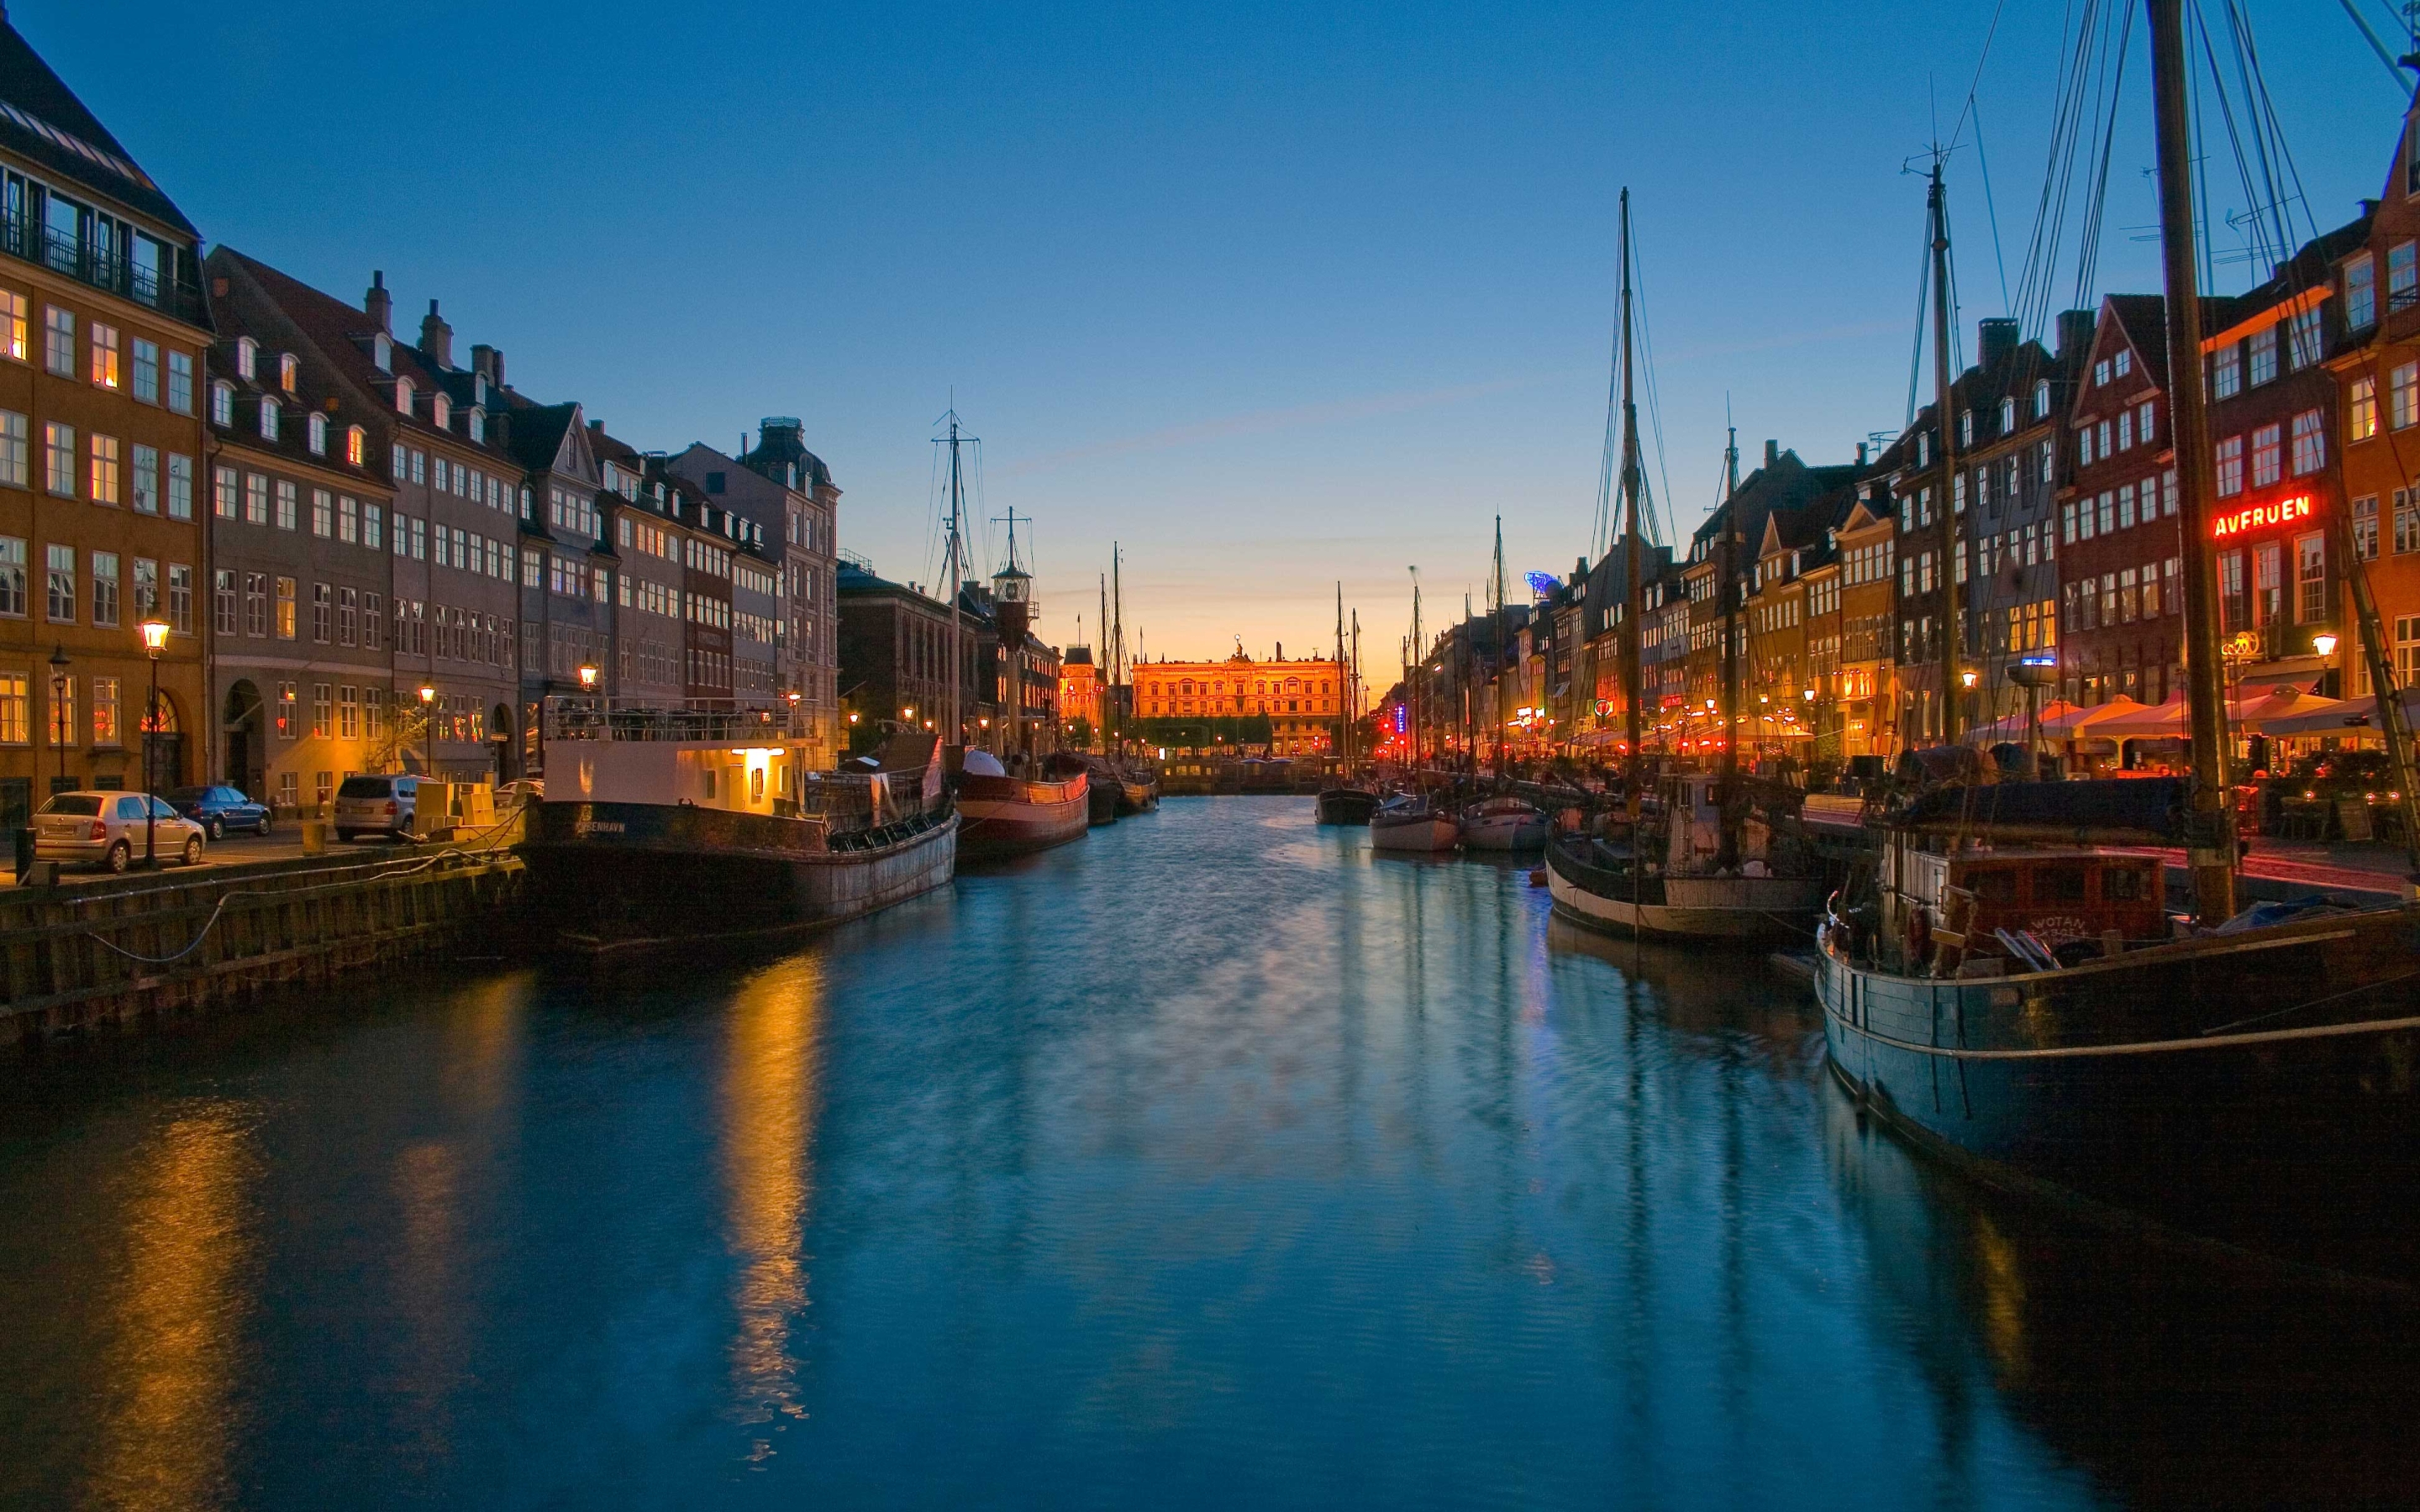 Danmark. Денмарк Дания. Королевство Дания Копенгаген. Столица Копенгаген столица. Датская столица Копенгаген.